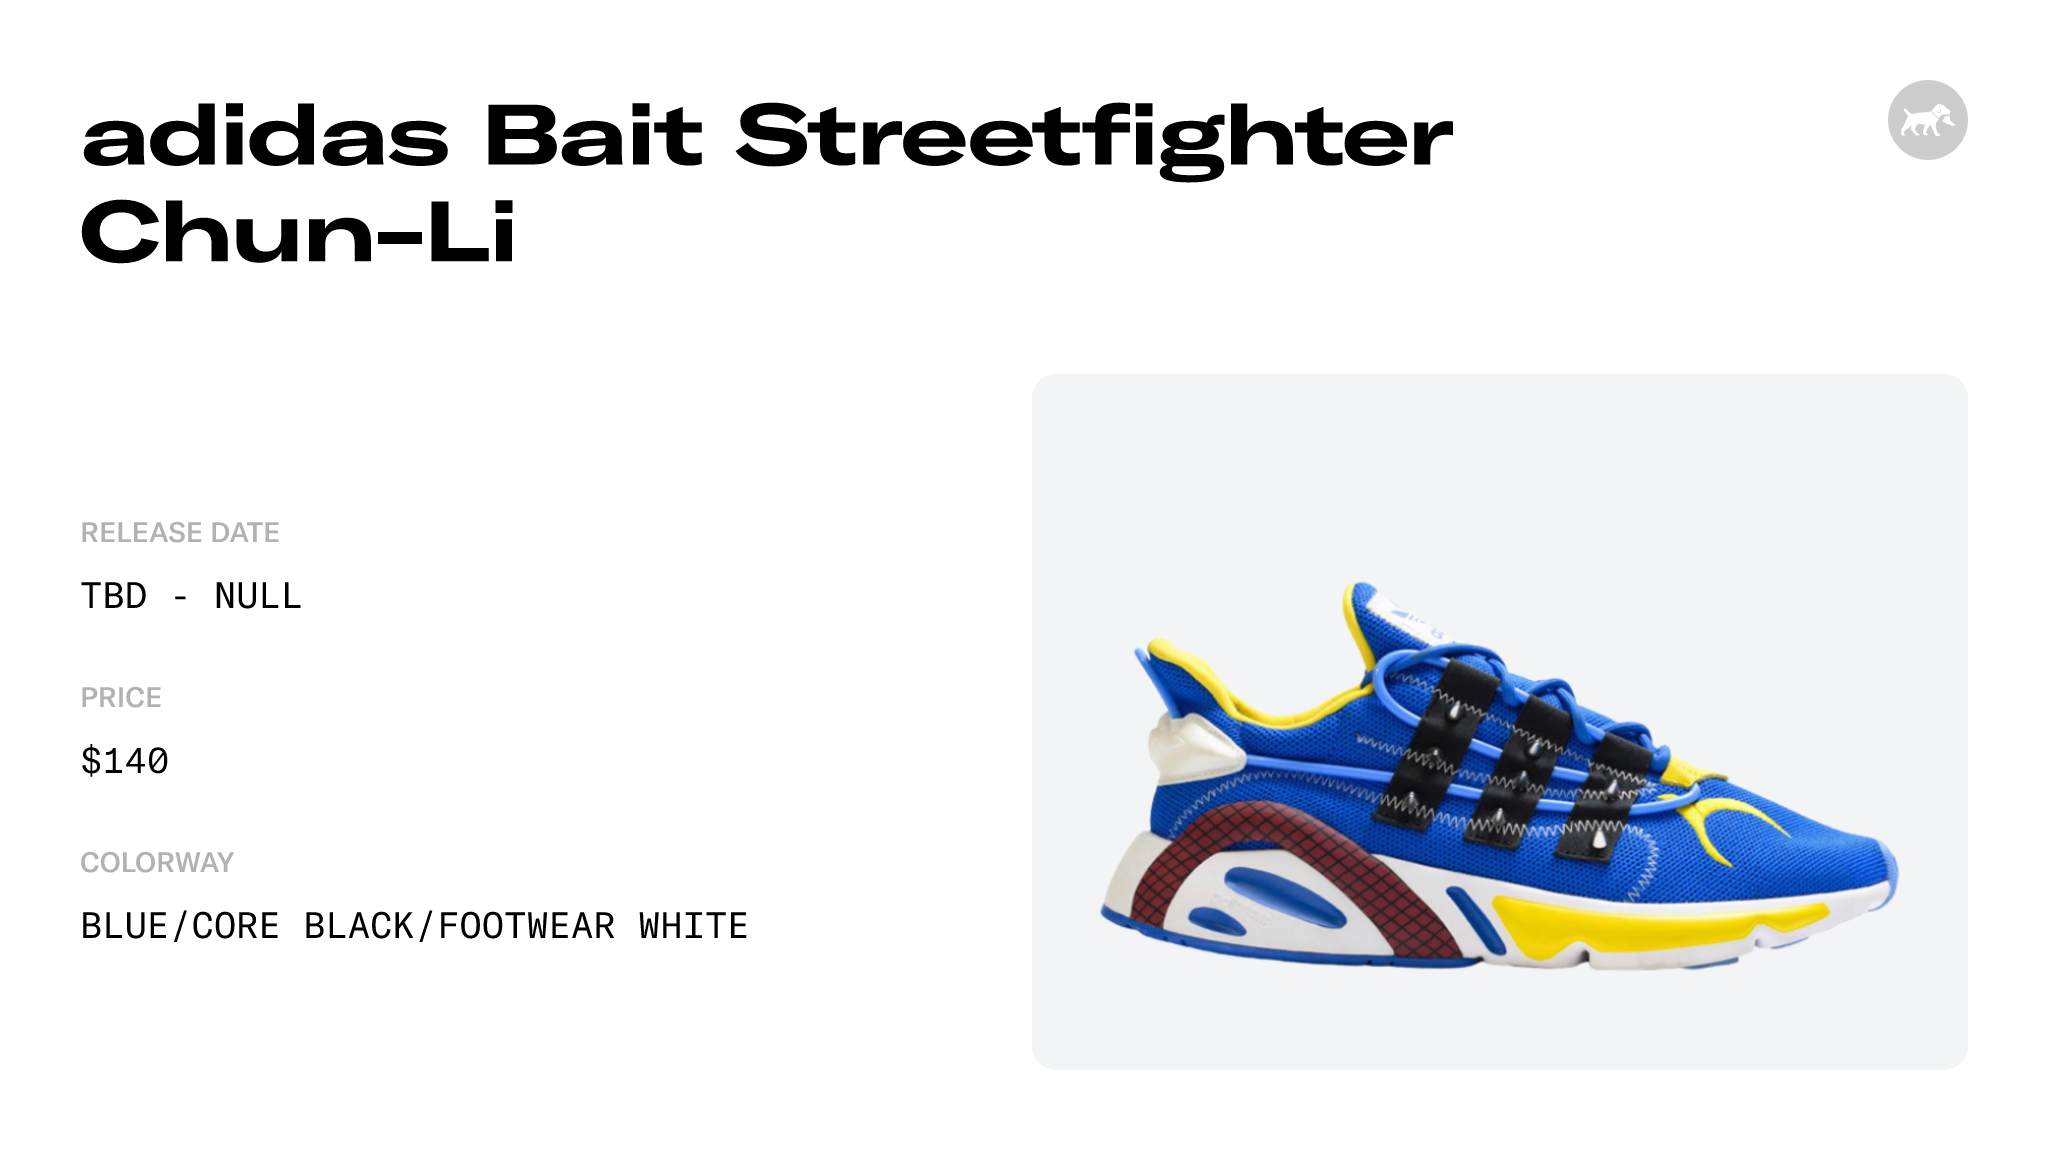 adidas Bait Streetfighter Chun-Li - FY5361 Raffles and Release Date